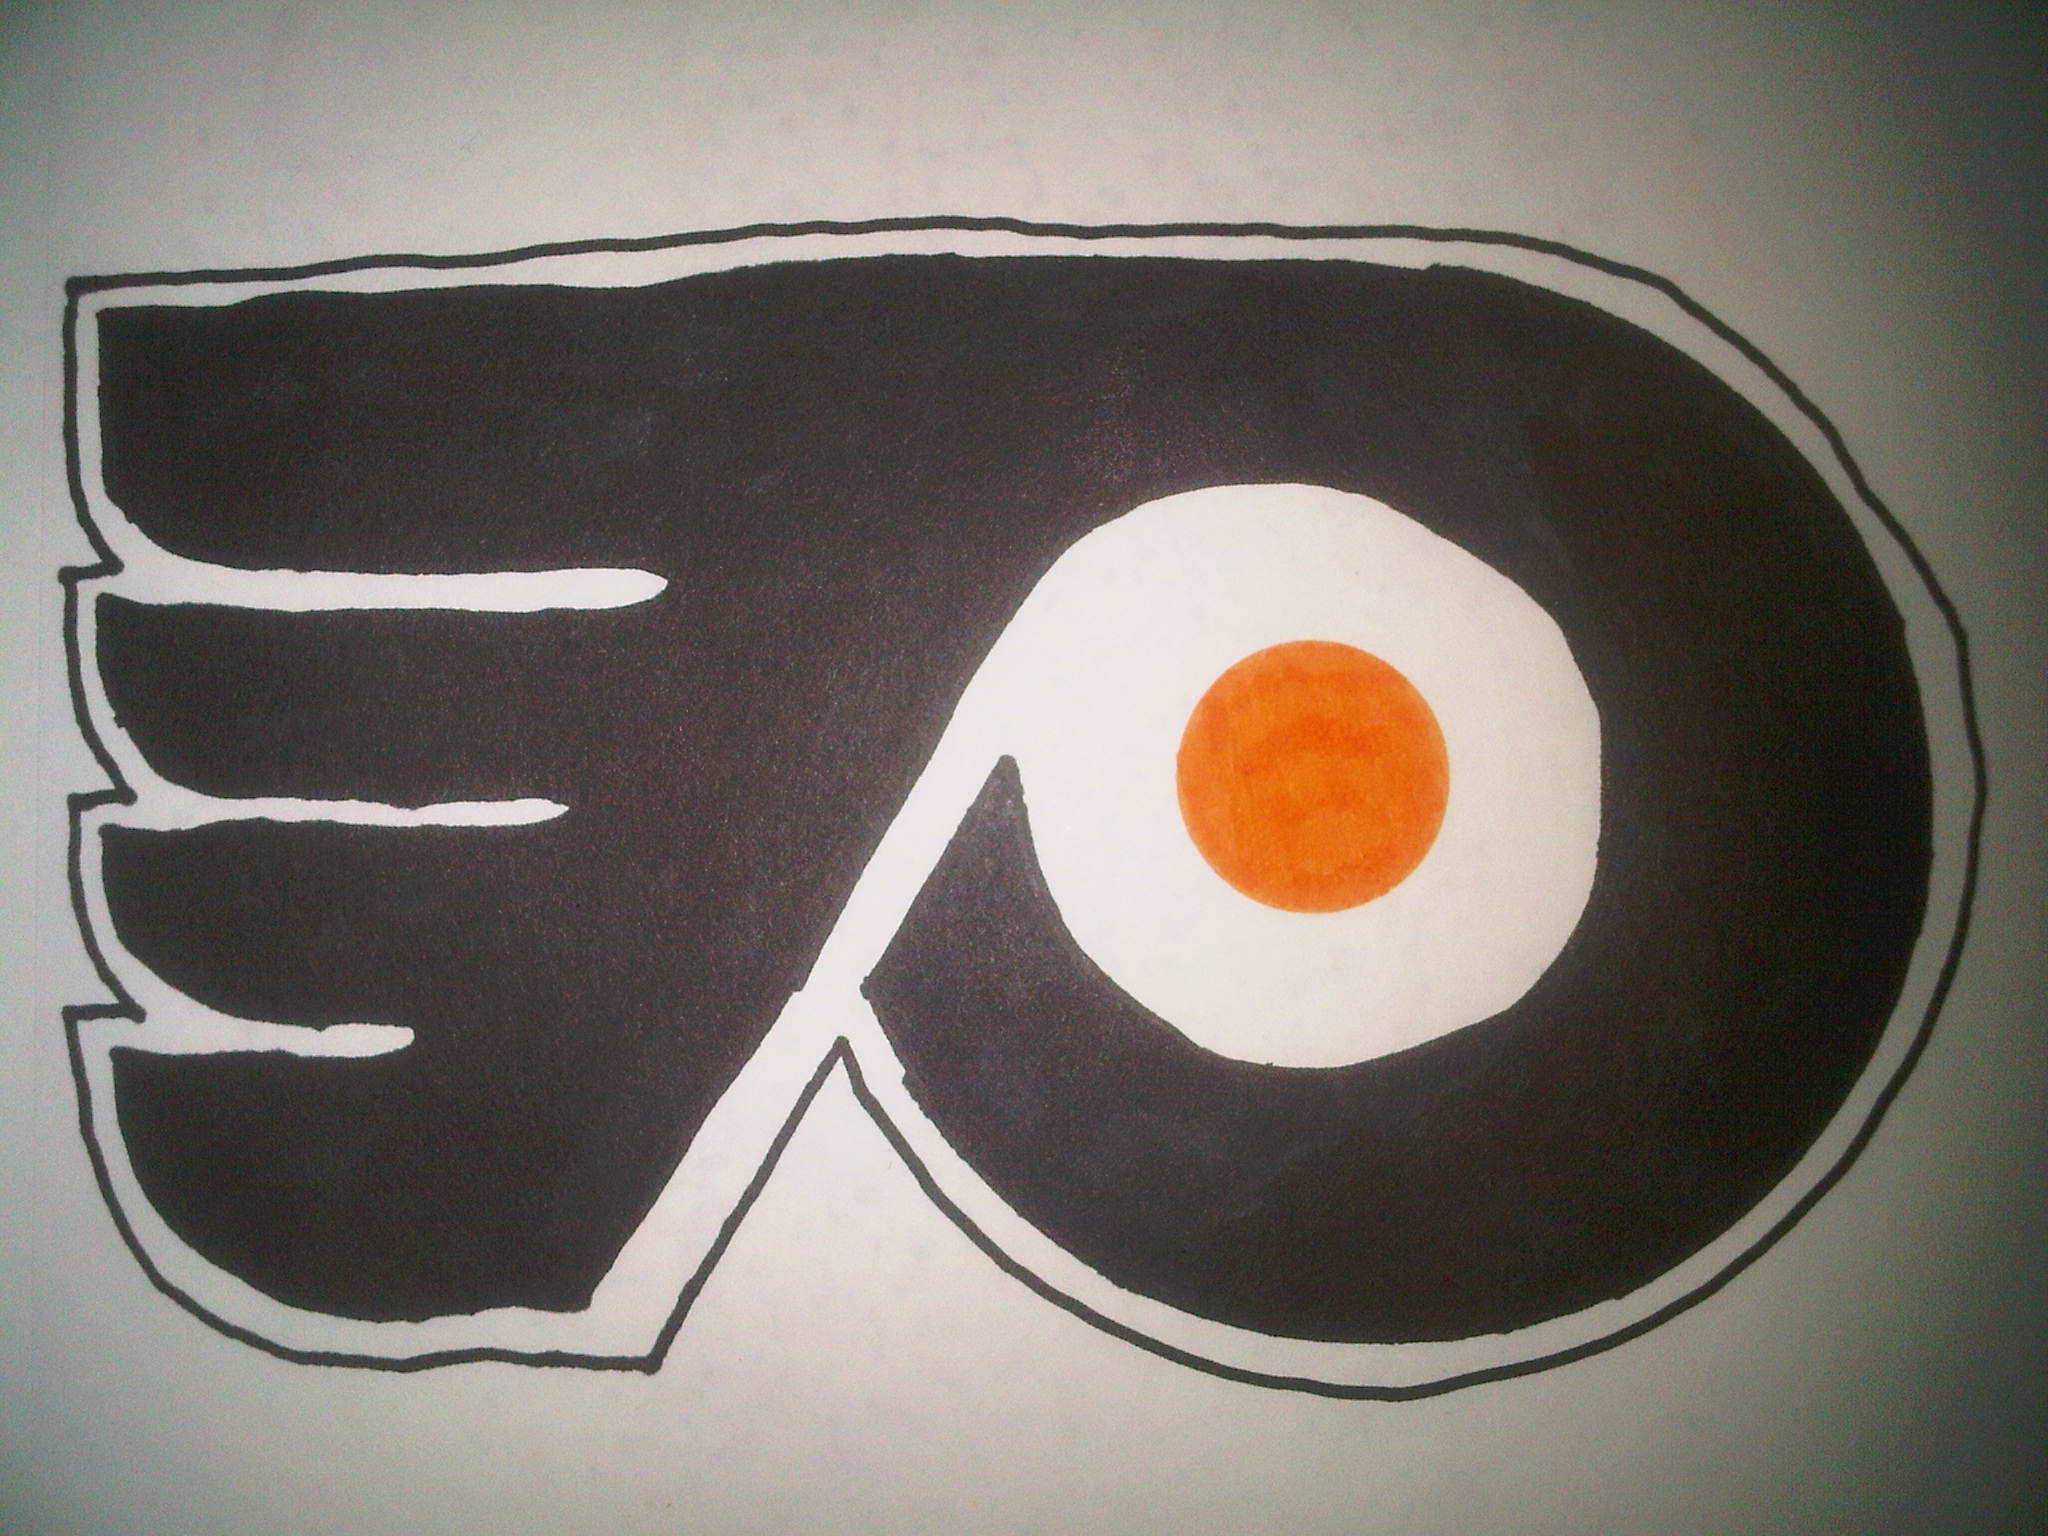 How to Draw the Philadelphia Flyers logo - YouTube